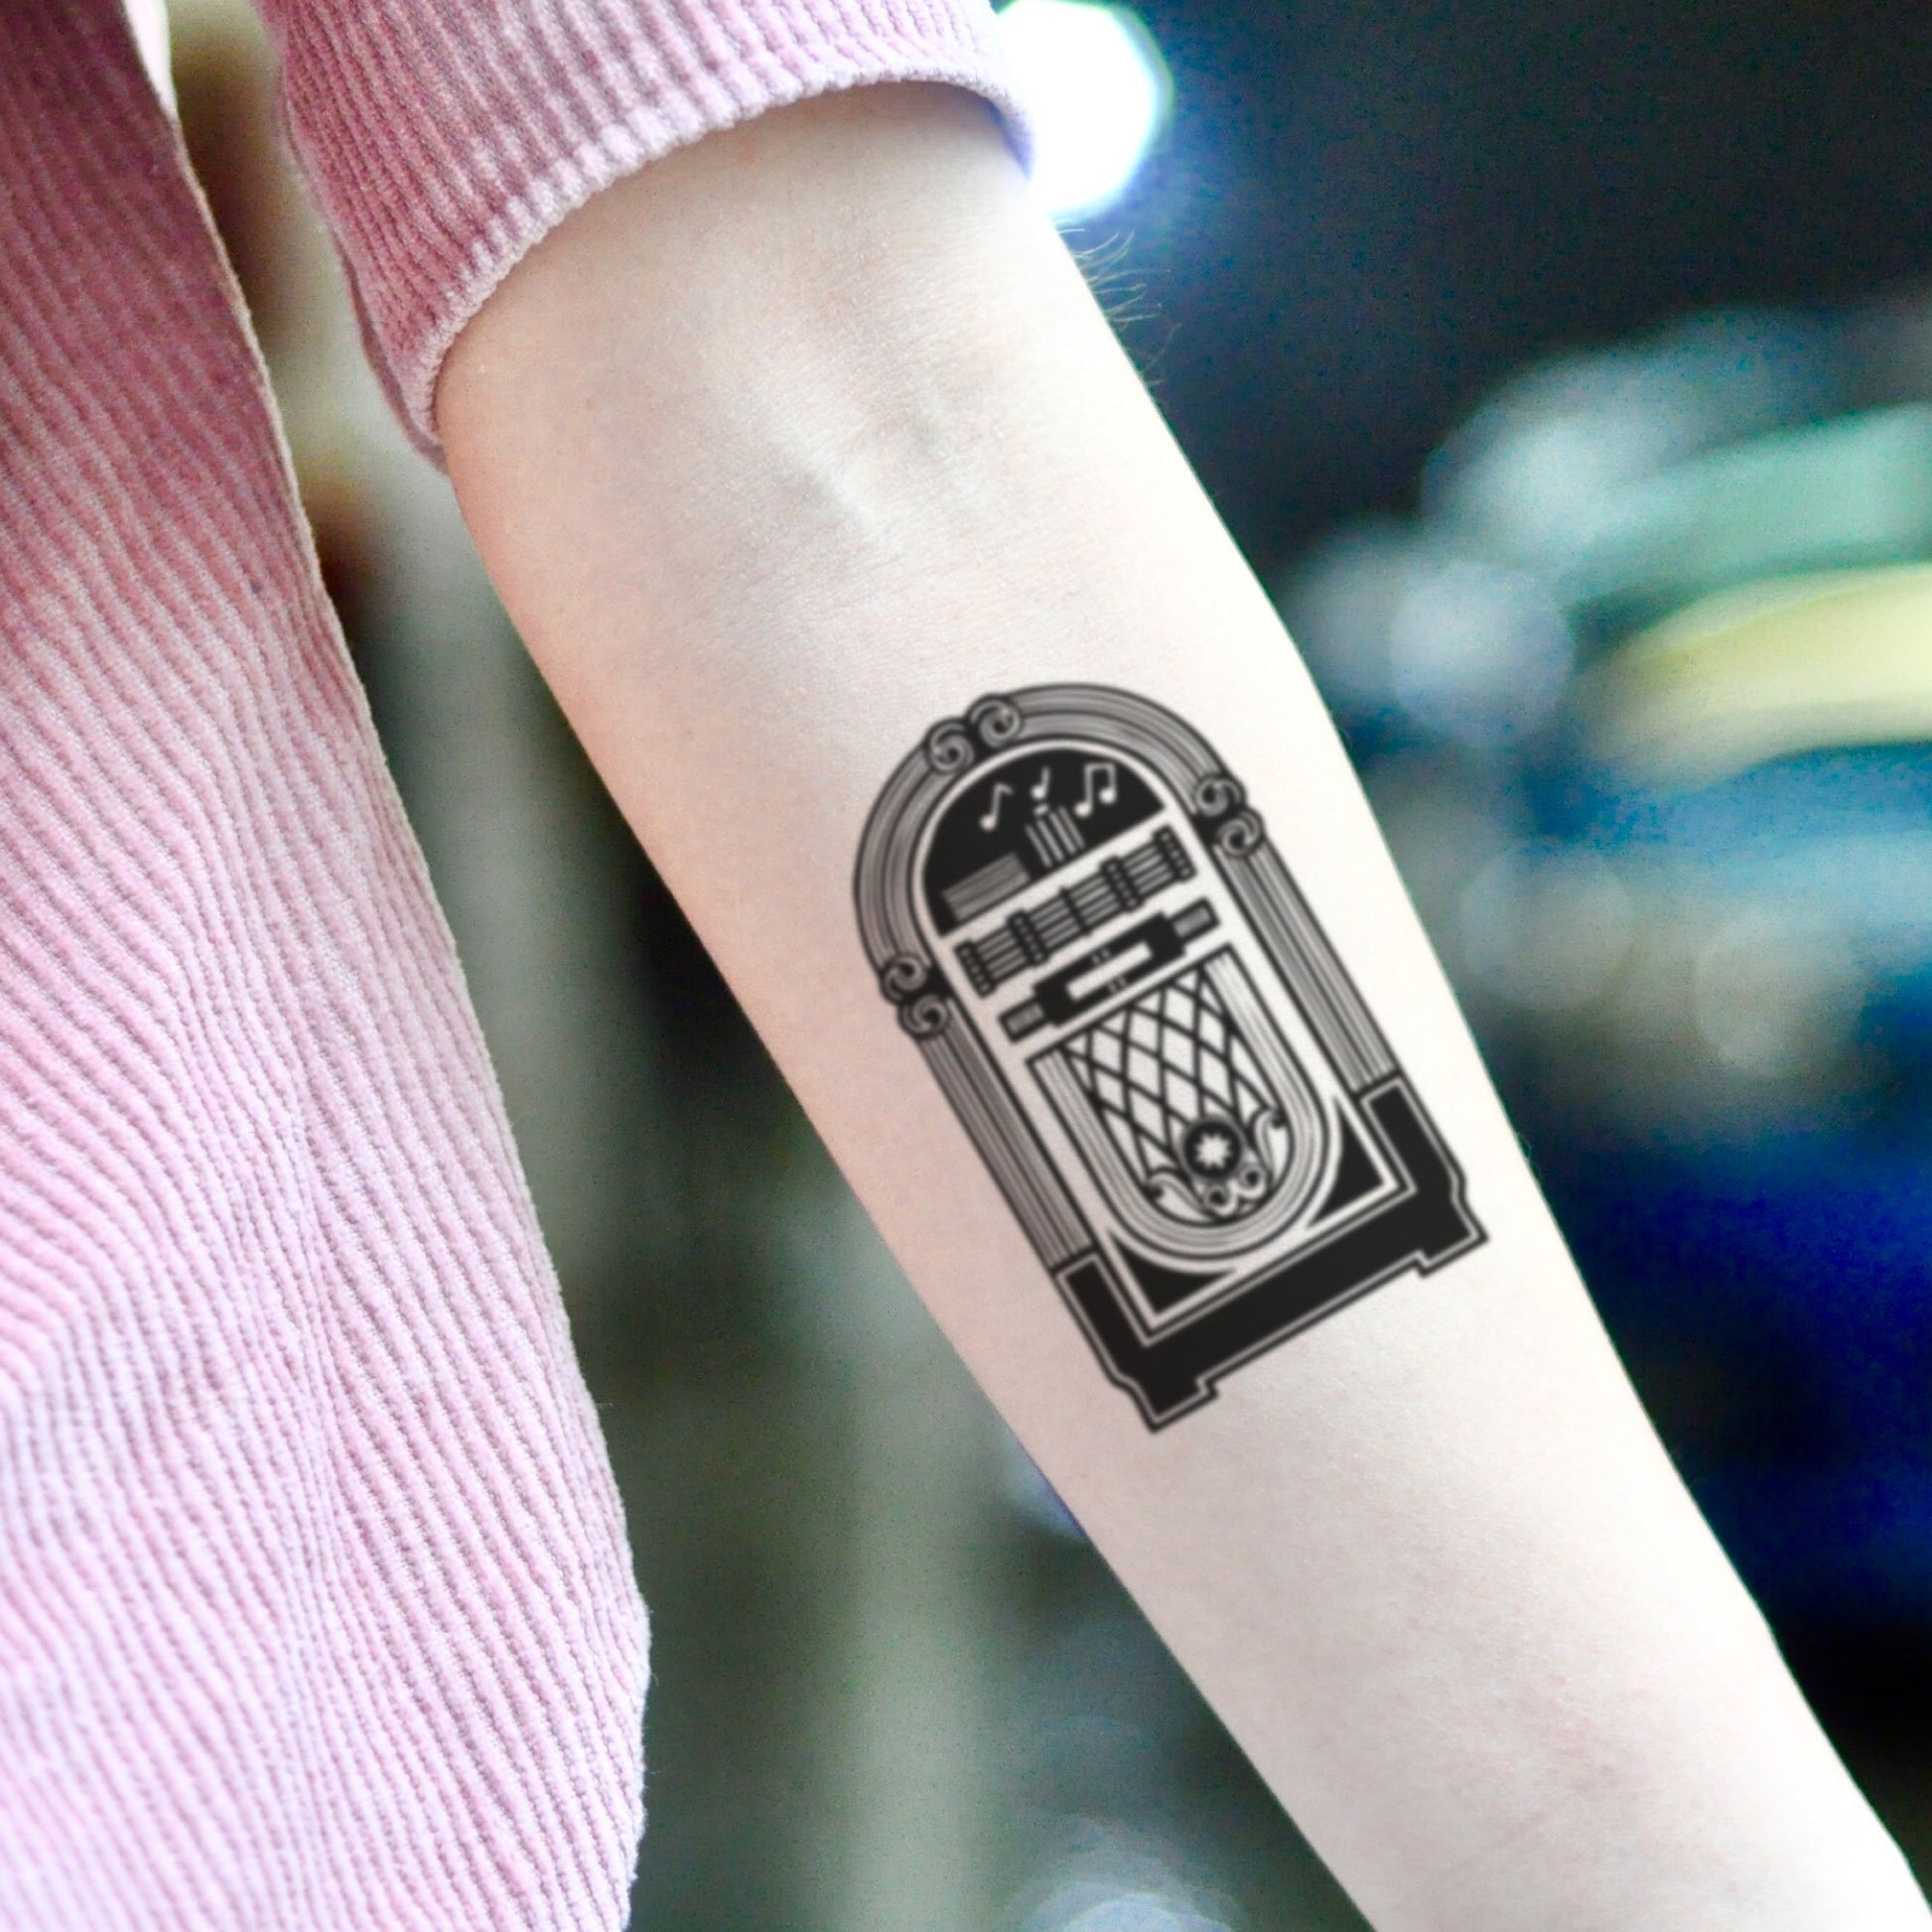 fake small jukebox vintage temporary tattoo sticker design idea on inner arm